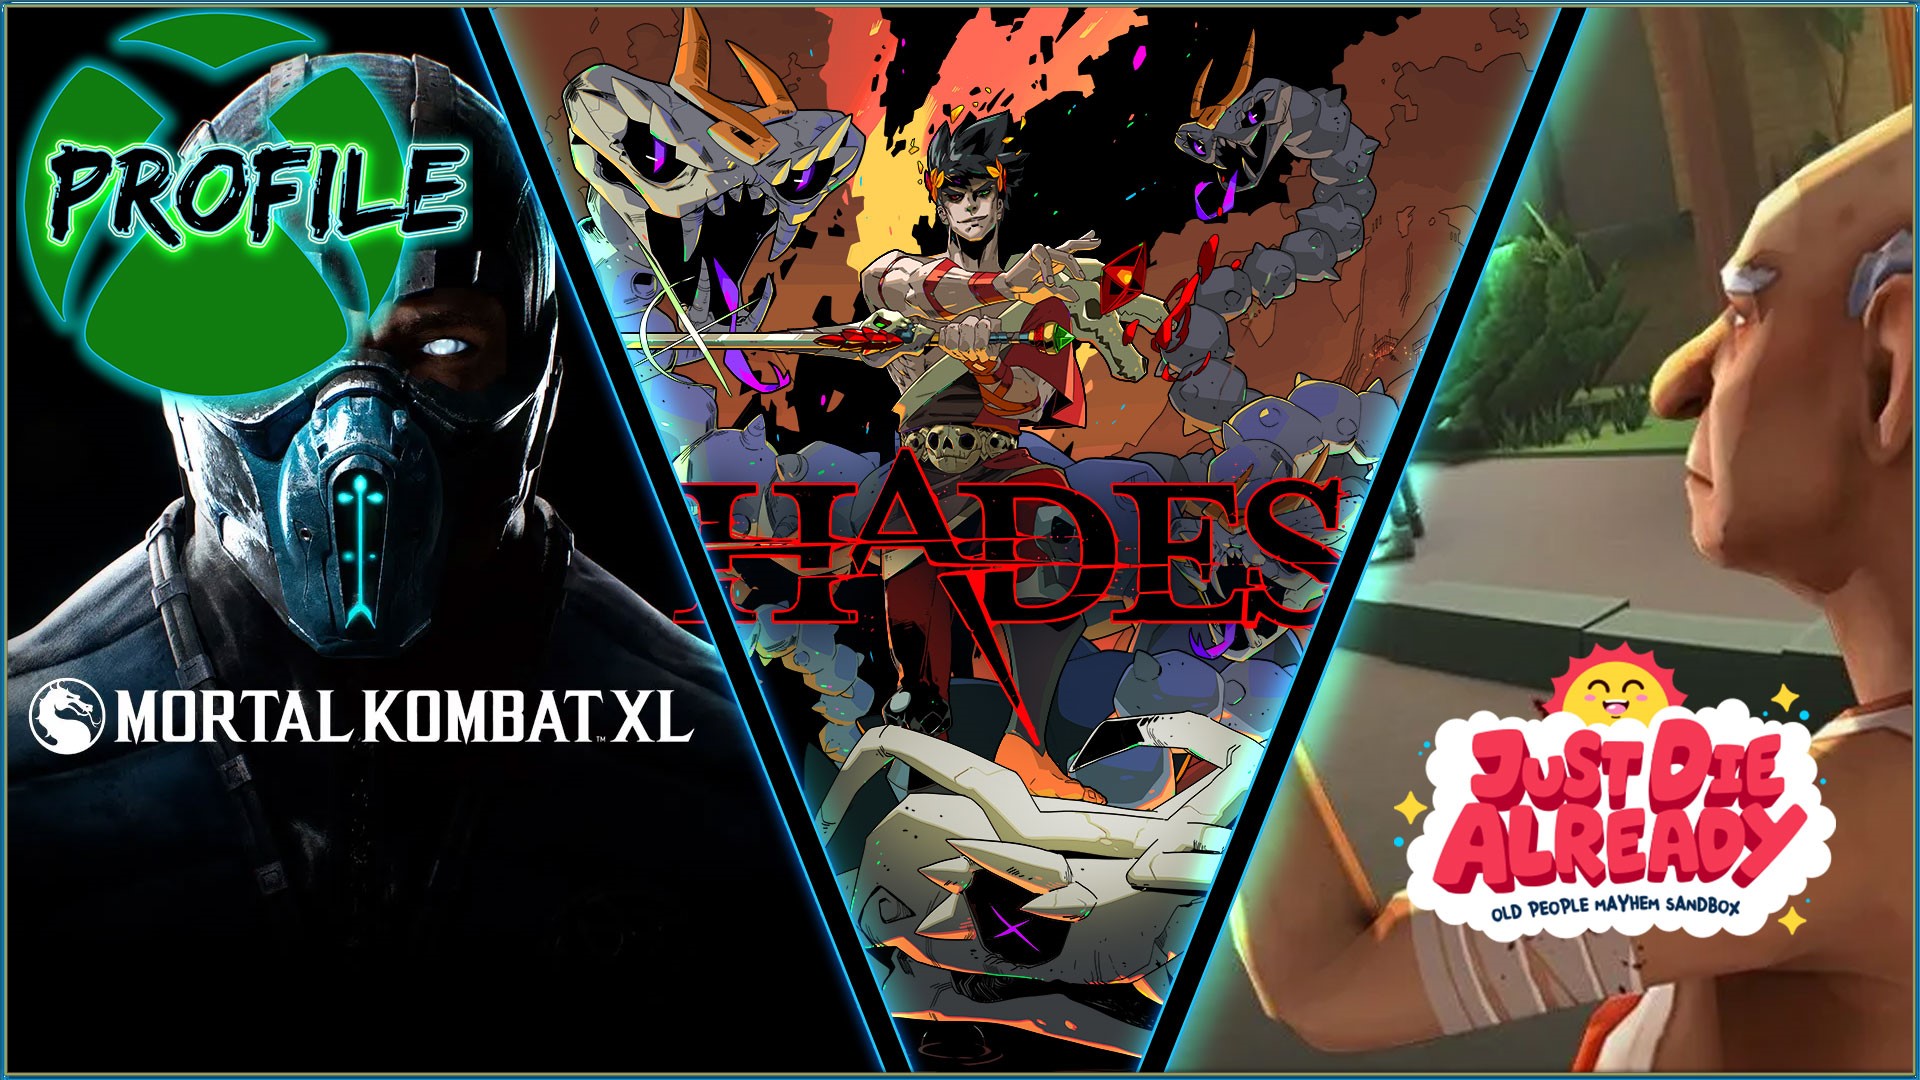 Hades + Mortal Kombat XL + Just Die Already XBOX ONE